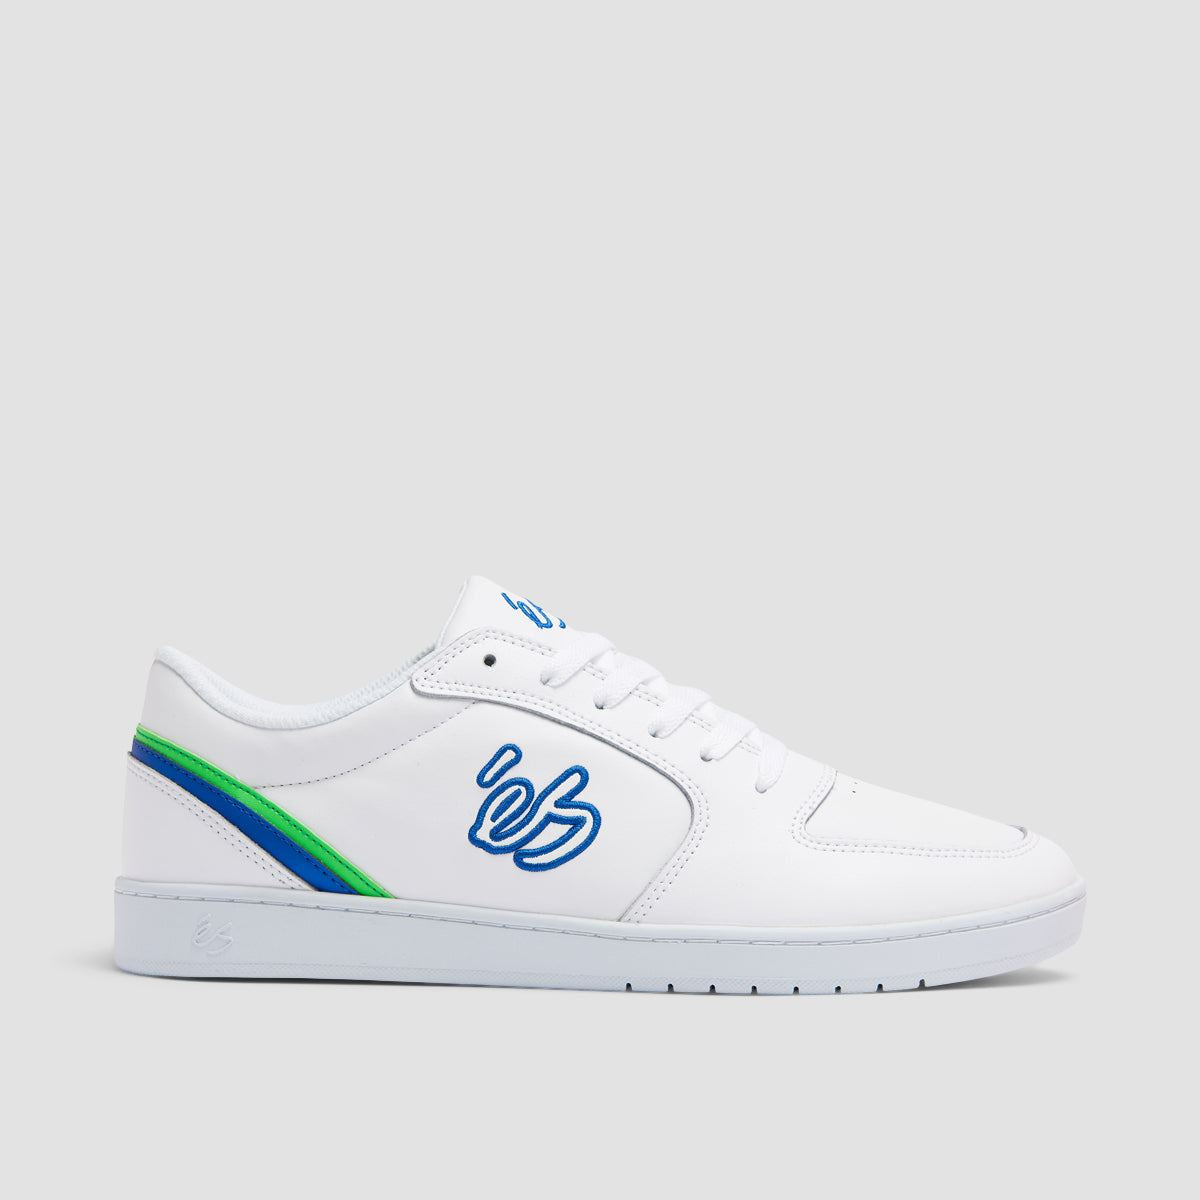 eS Eos Shoes - White/Blue/Green